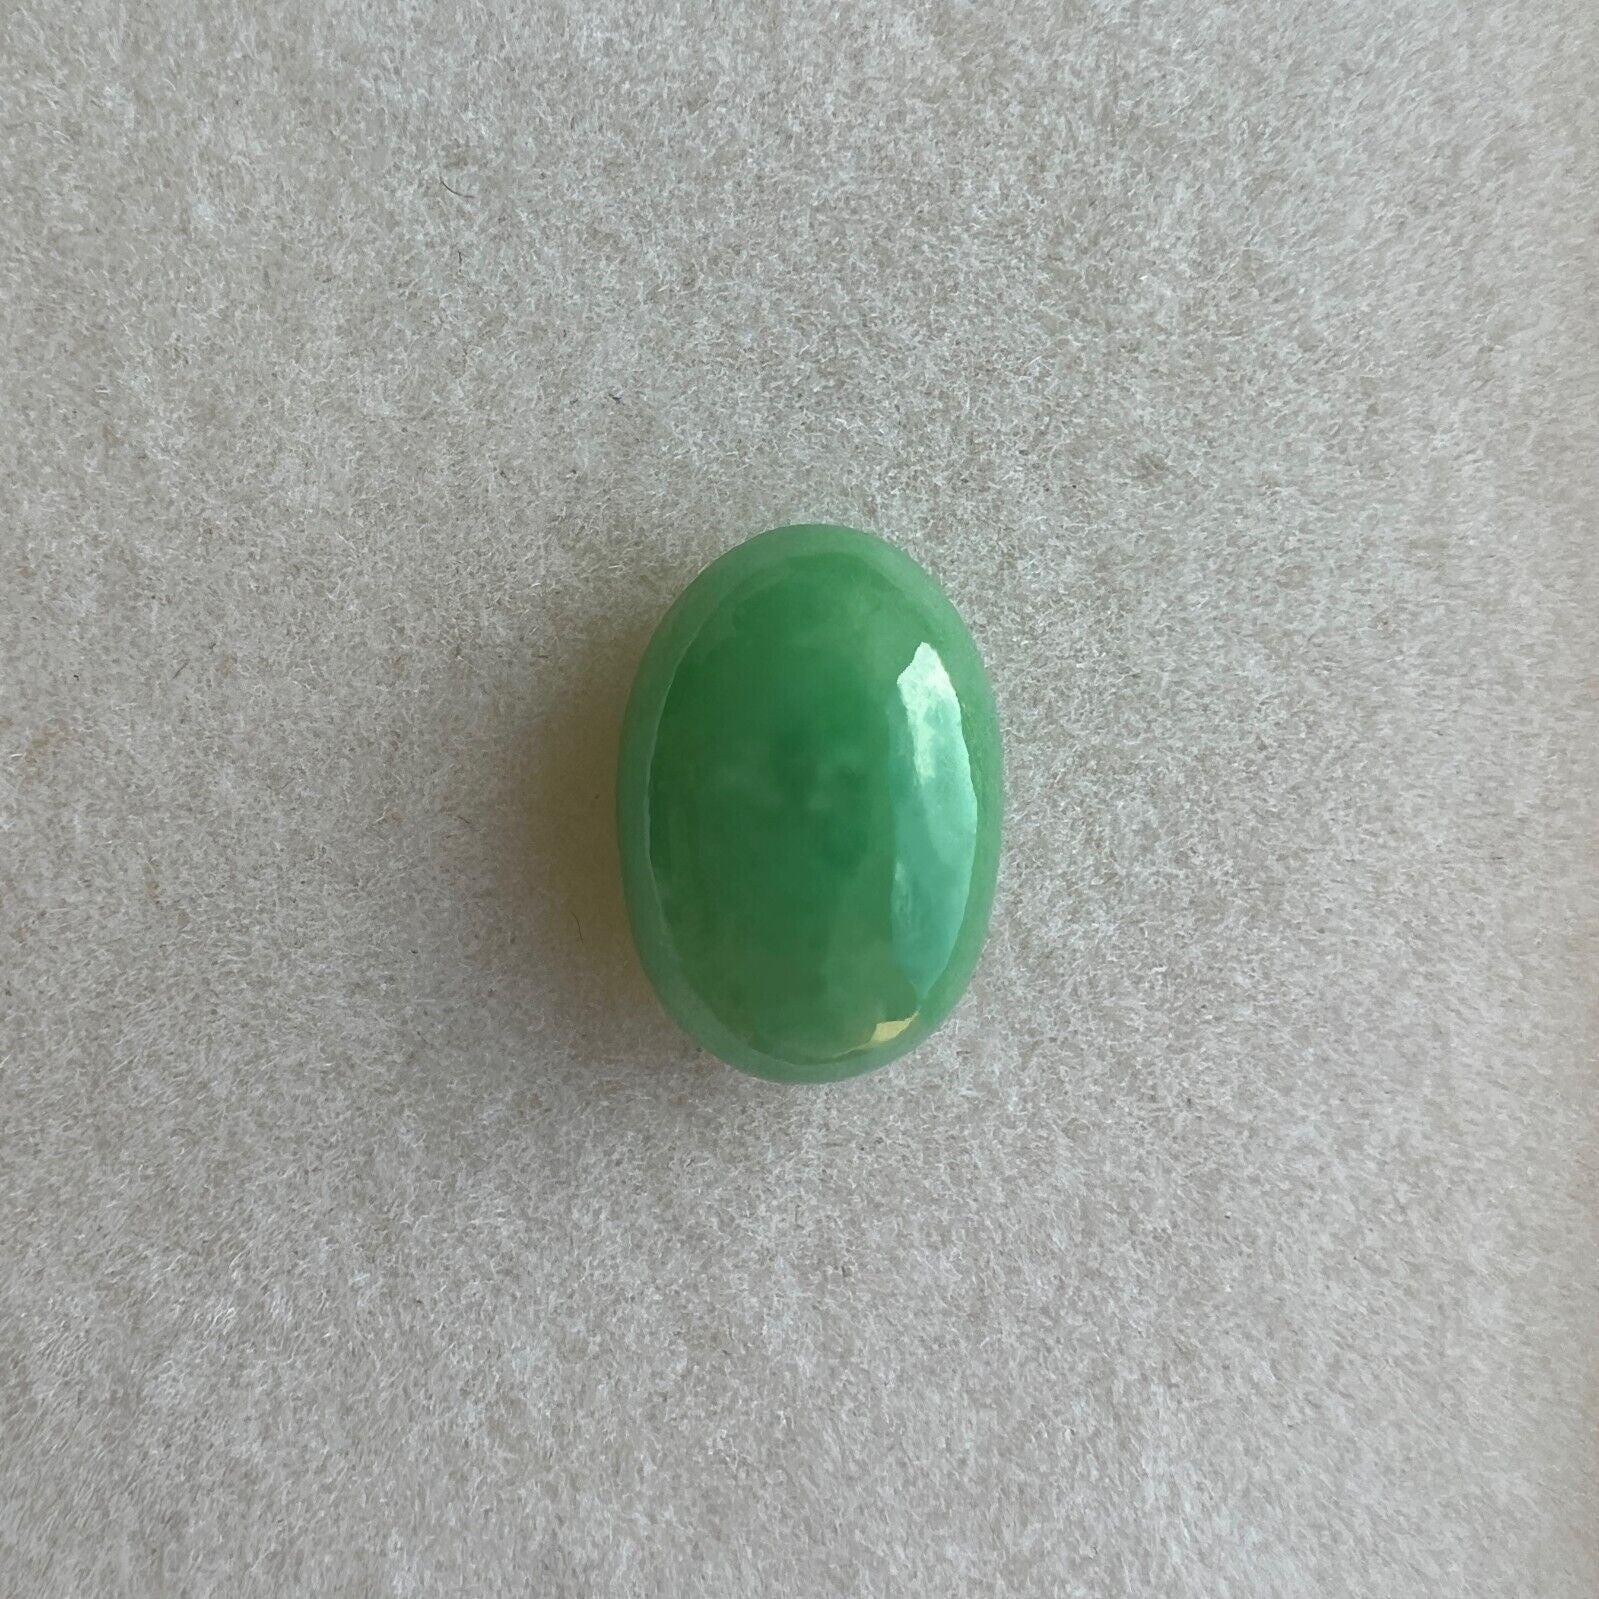 Oval Cut Rare 4.21ct IGI Certified Green Jadeite Jade ‘A’ Grade Oval Cabochon Loose Gem For Sale